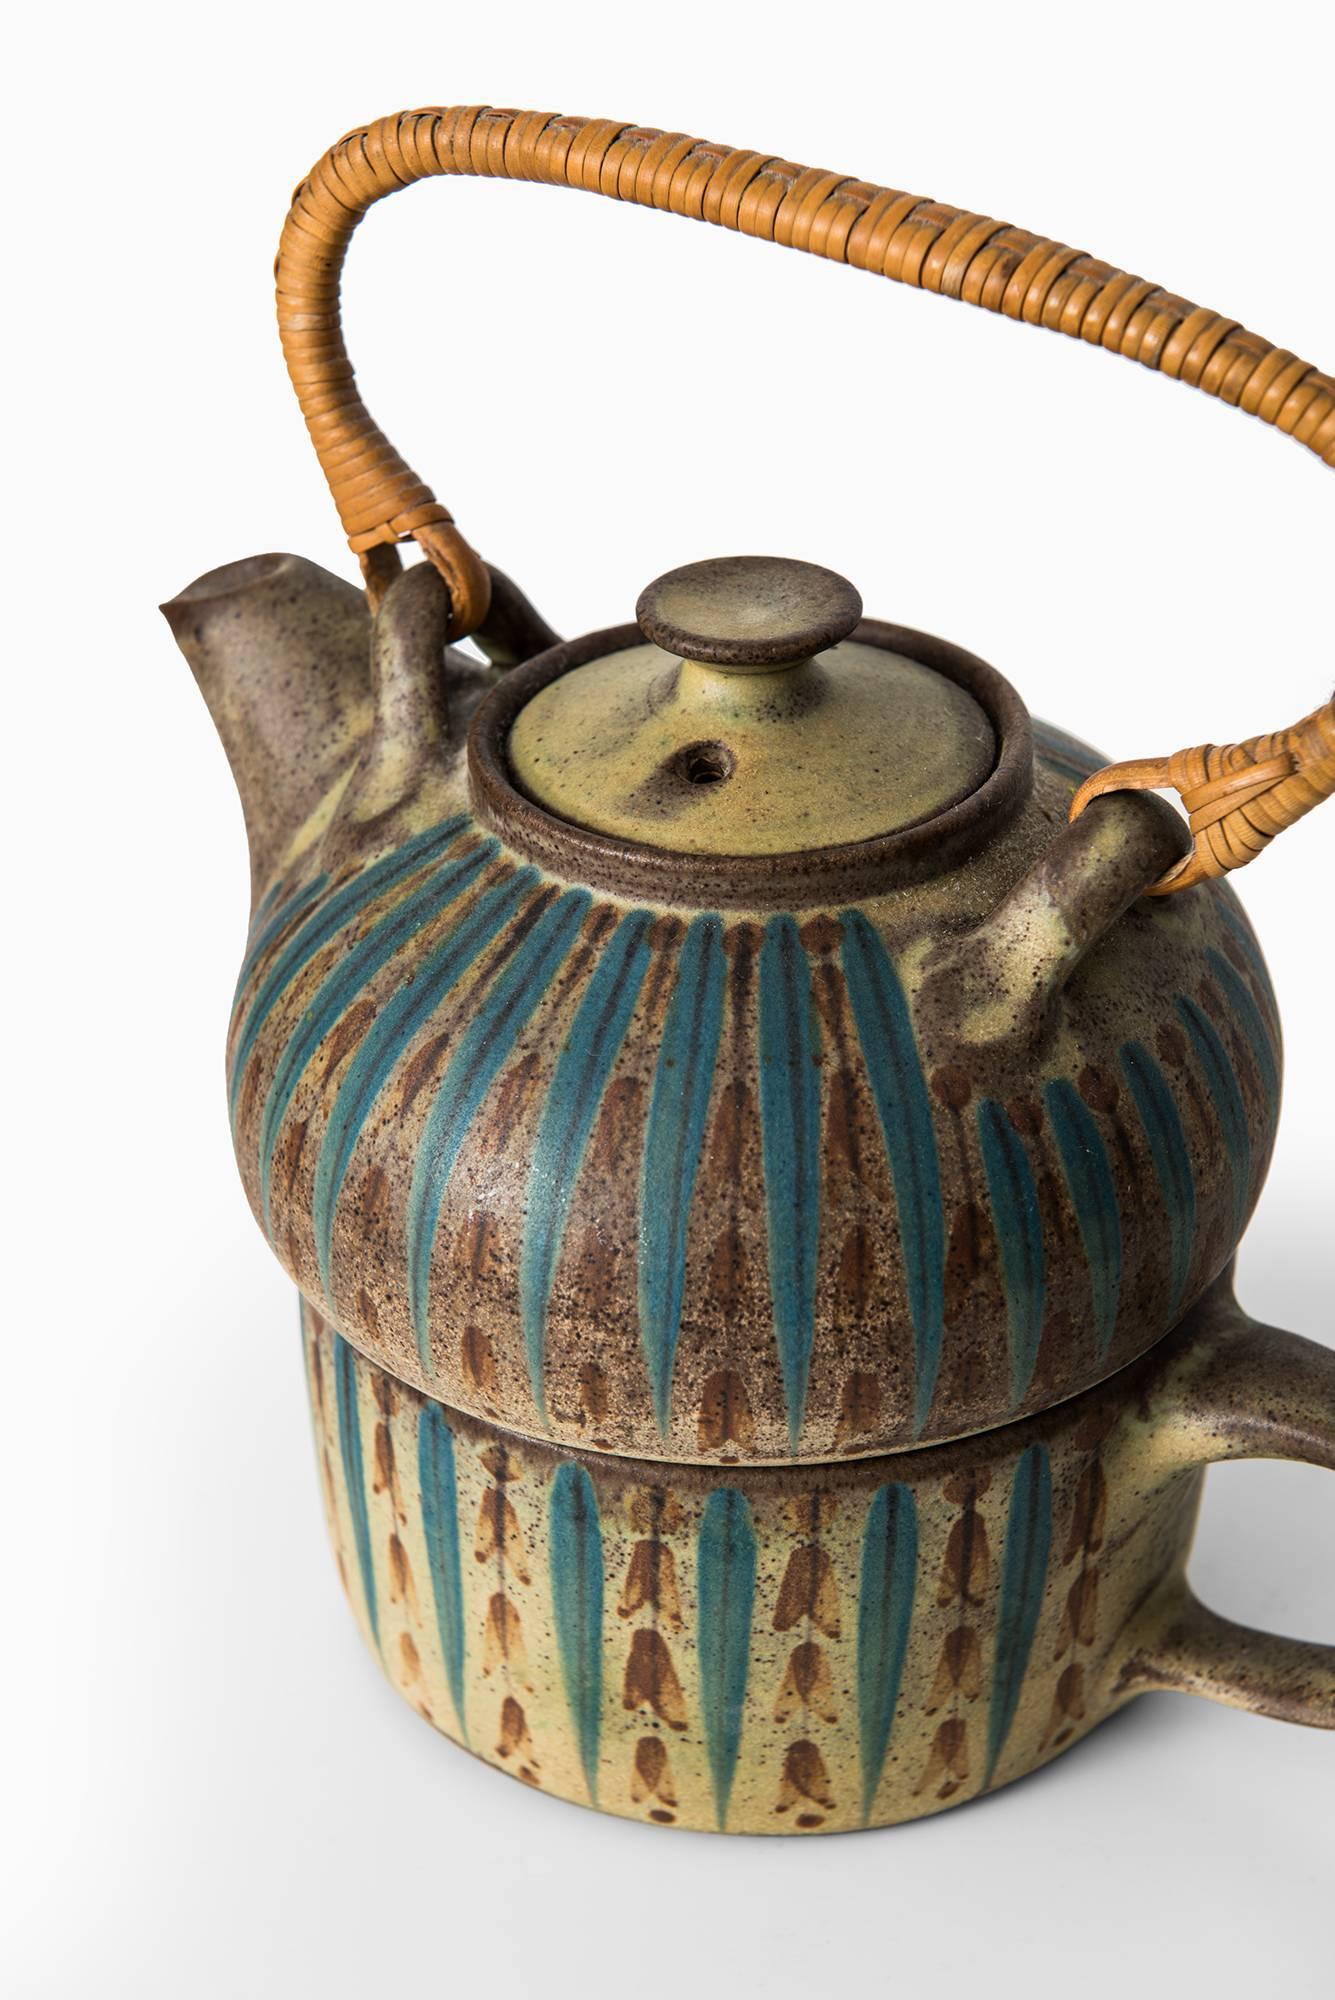 Rare teapot designed by Margrethe Dybdahl. Produced in Denmark.